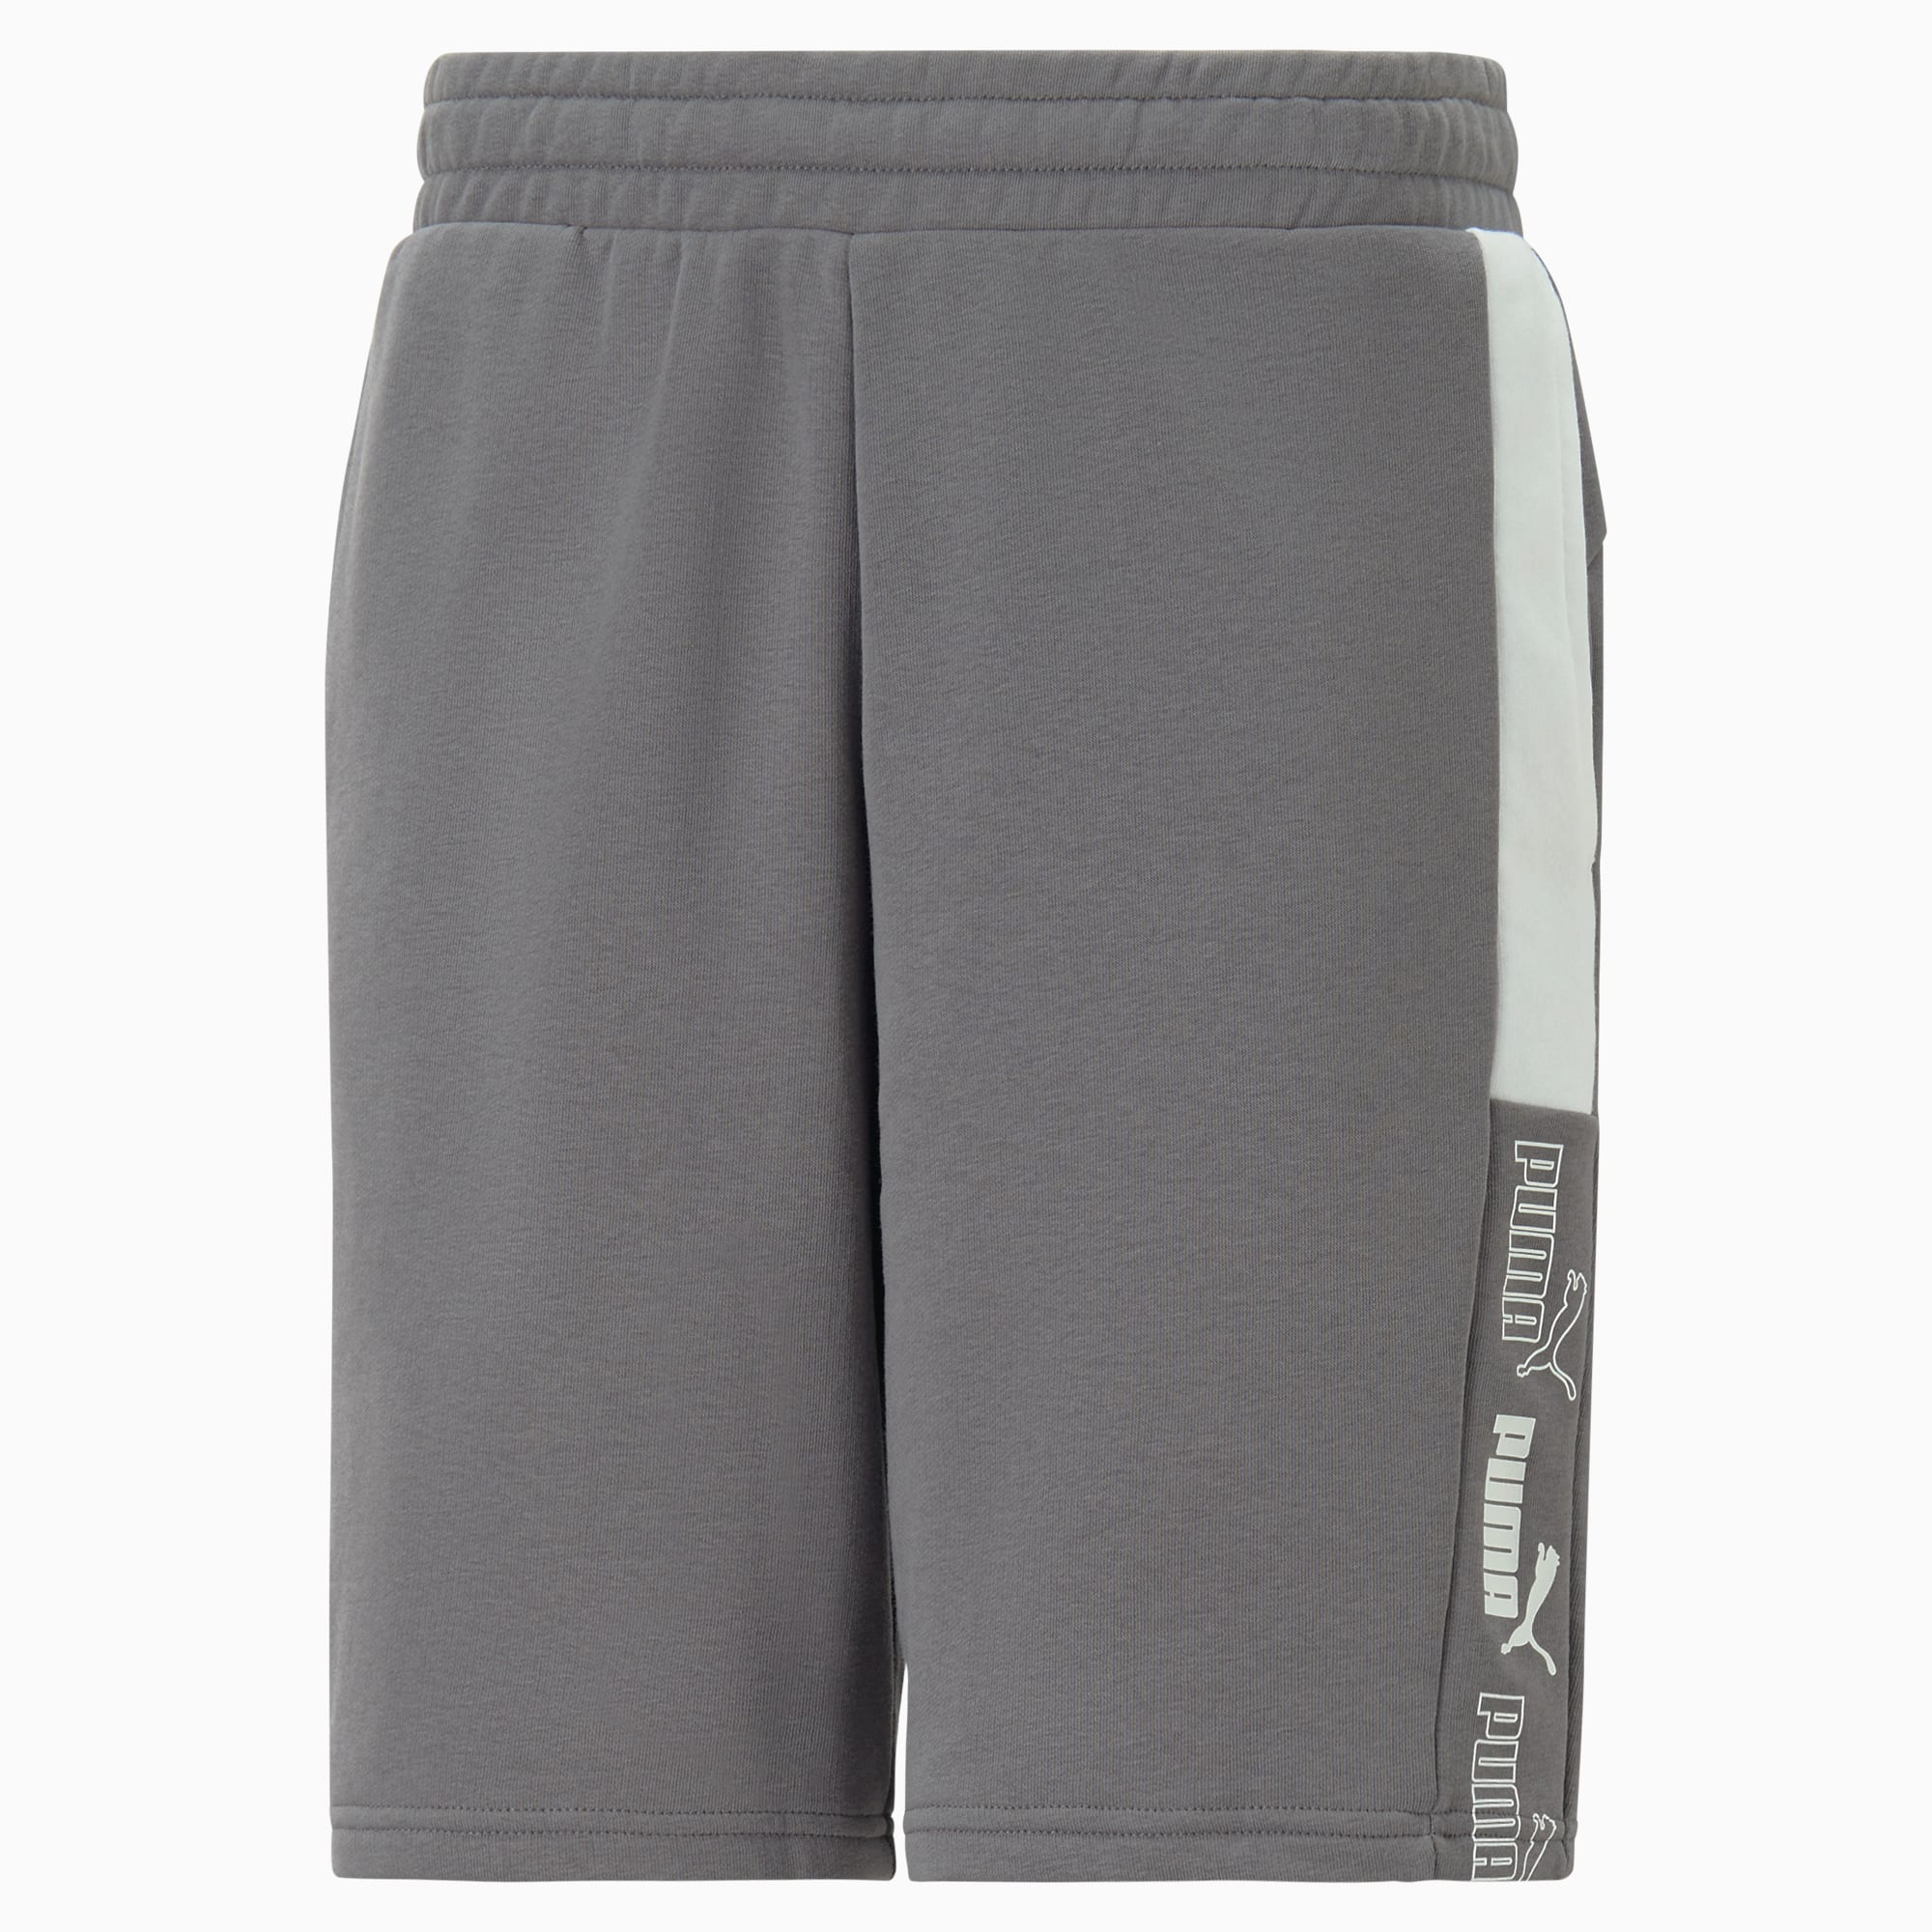 PUMA Block 9 Ft Shorts Men, Cool Dark Grey/White, Size 4XL, Clothing